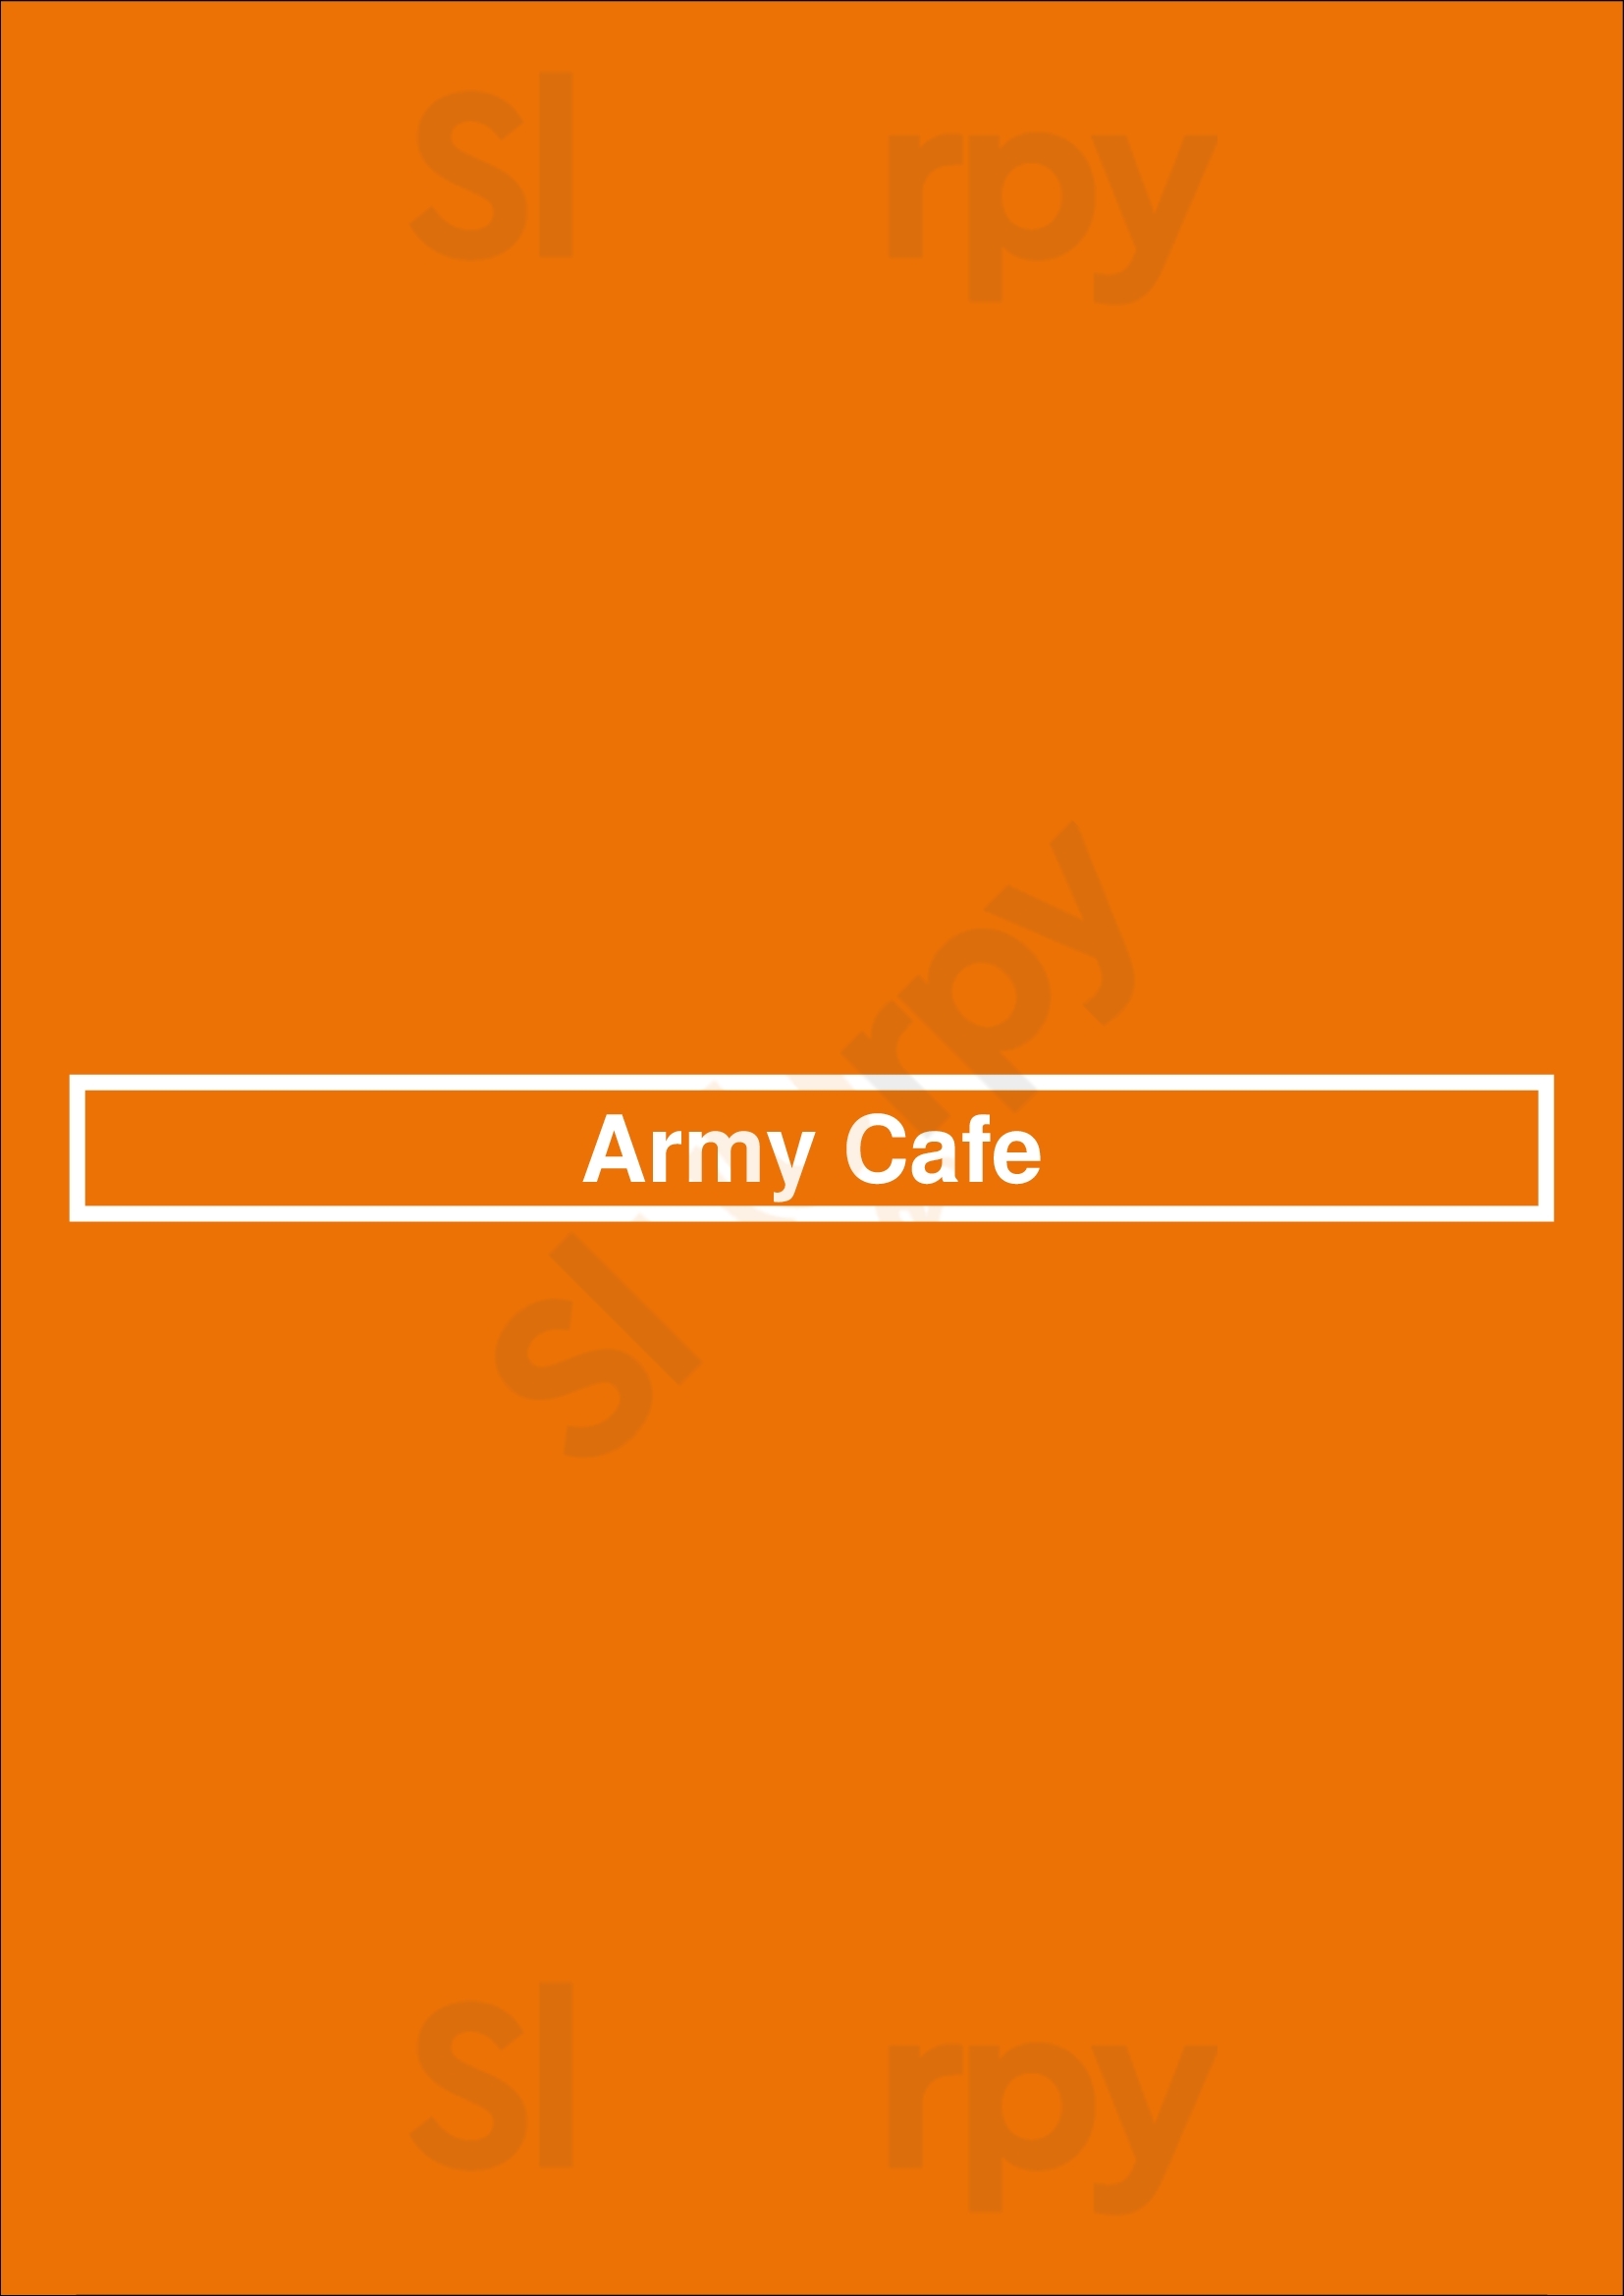 Army Cafe Buenos Aires Menu - 1